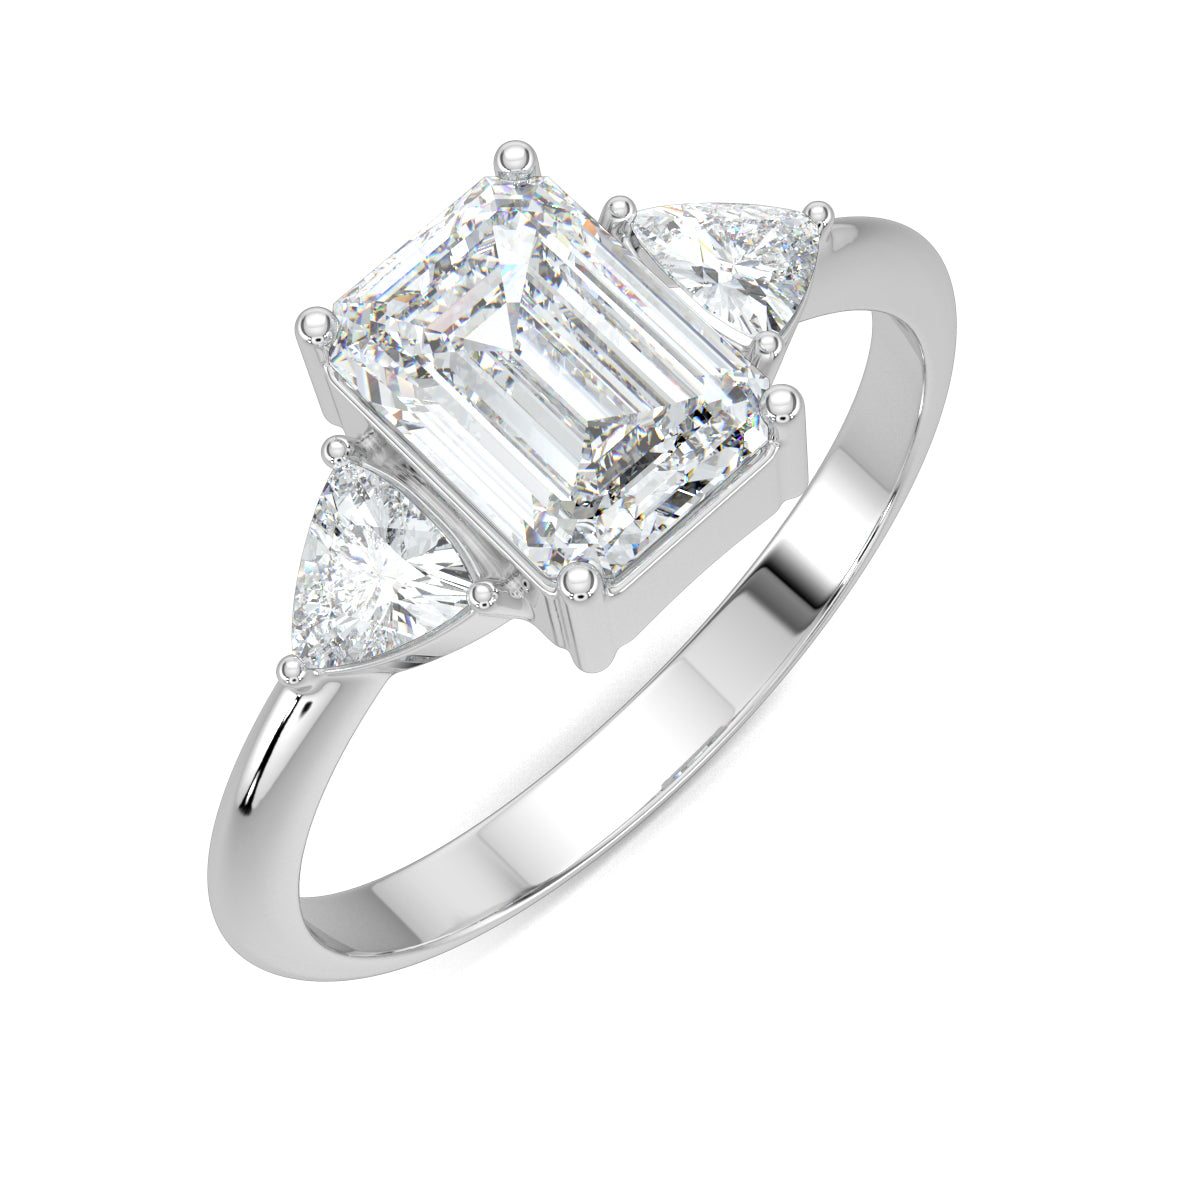 White Gold, Diamond Ring, natural diamond ring, lab-grown diamond ring, Classic Emerald Trillion Ring, Emerald Shape Diamond, Trillion Cut Diamonds, Solitaire Ring, Classic Band